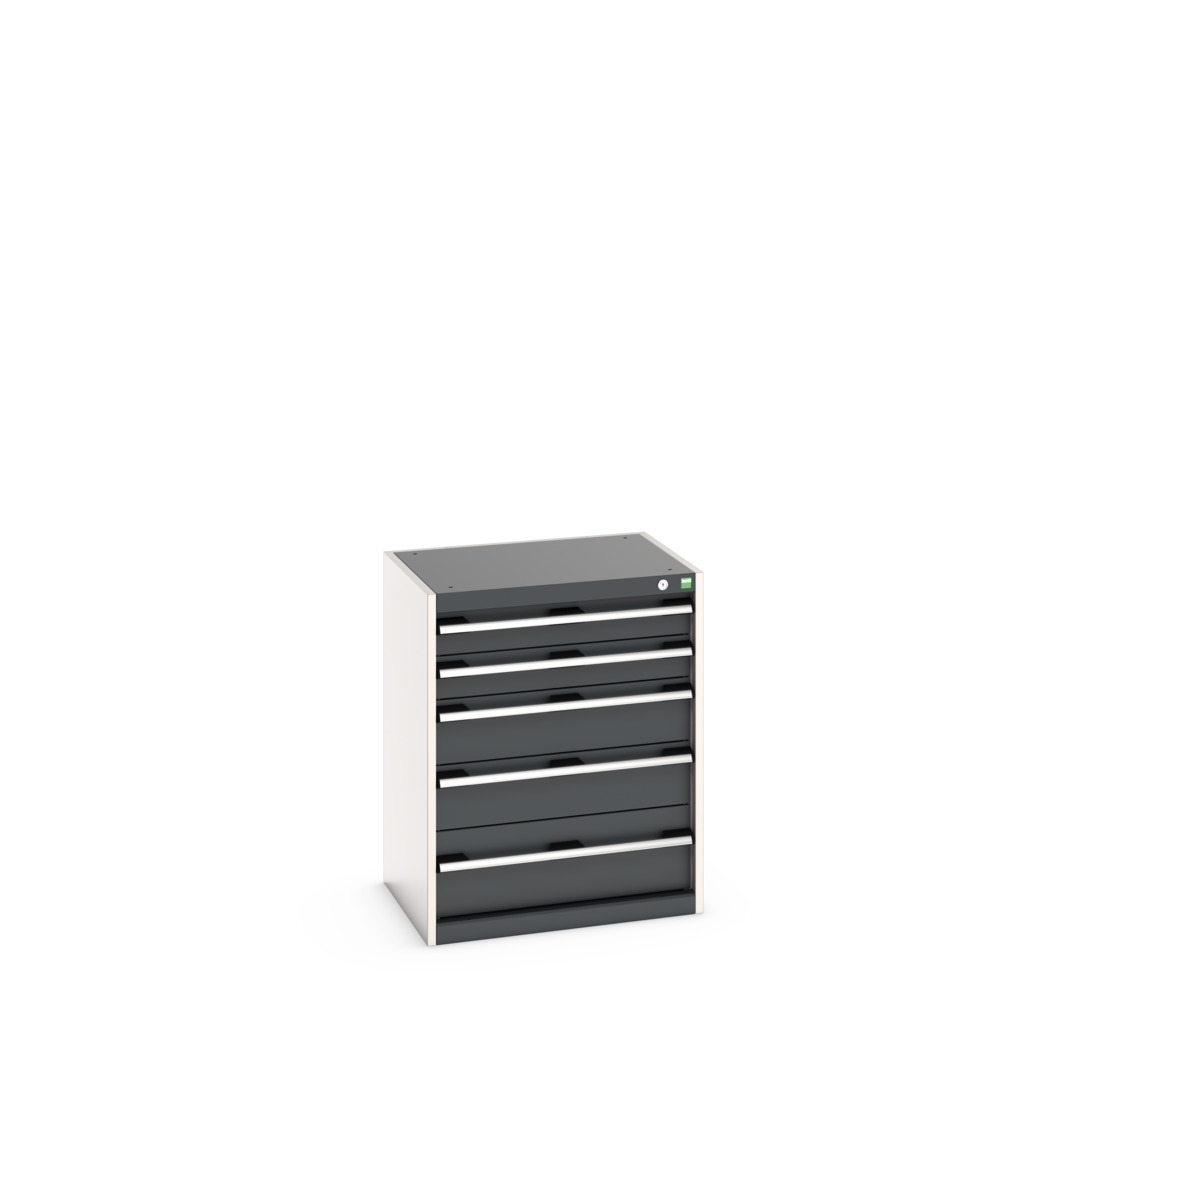 40011046. - cubio drawer cabinet